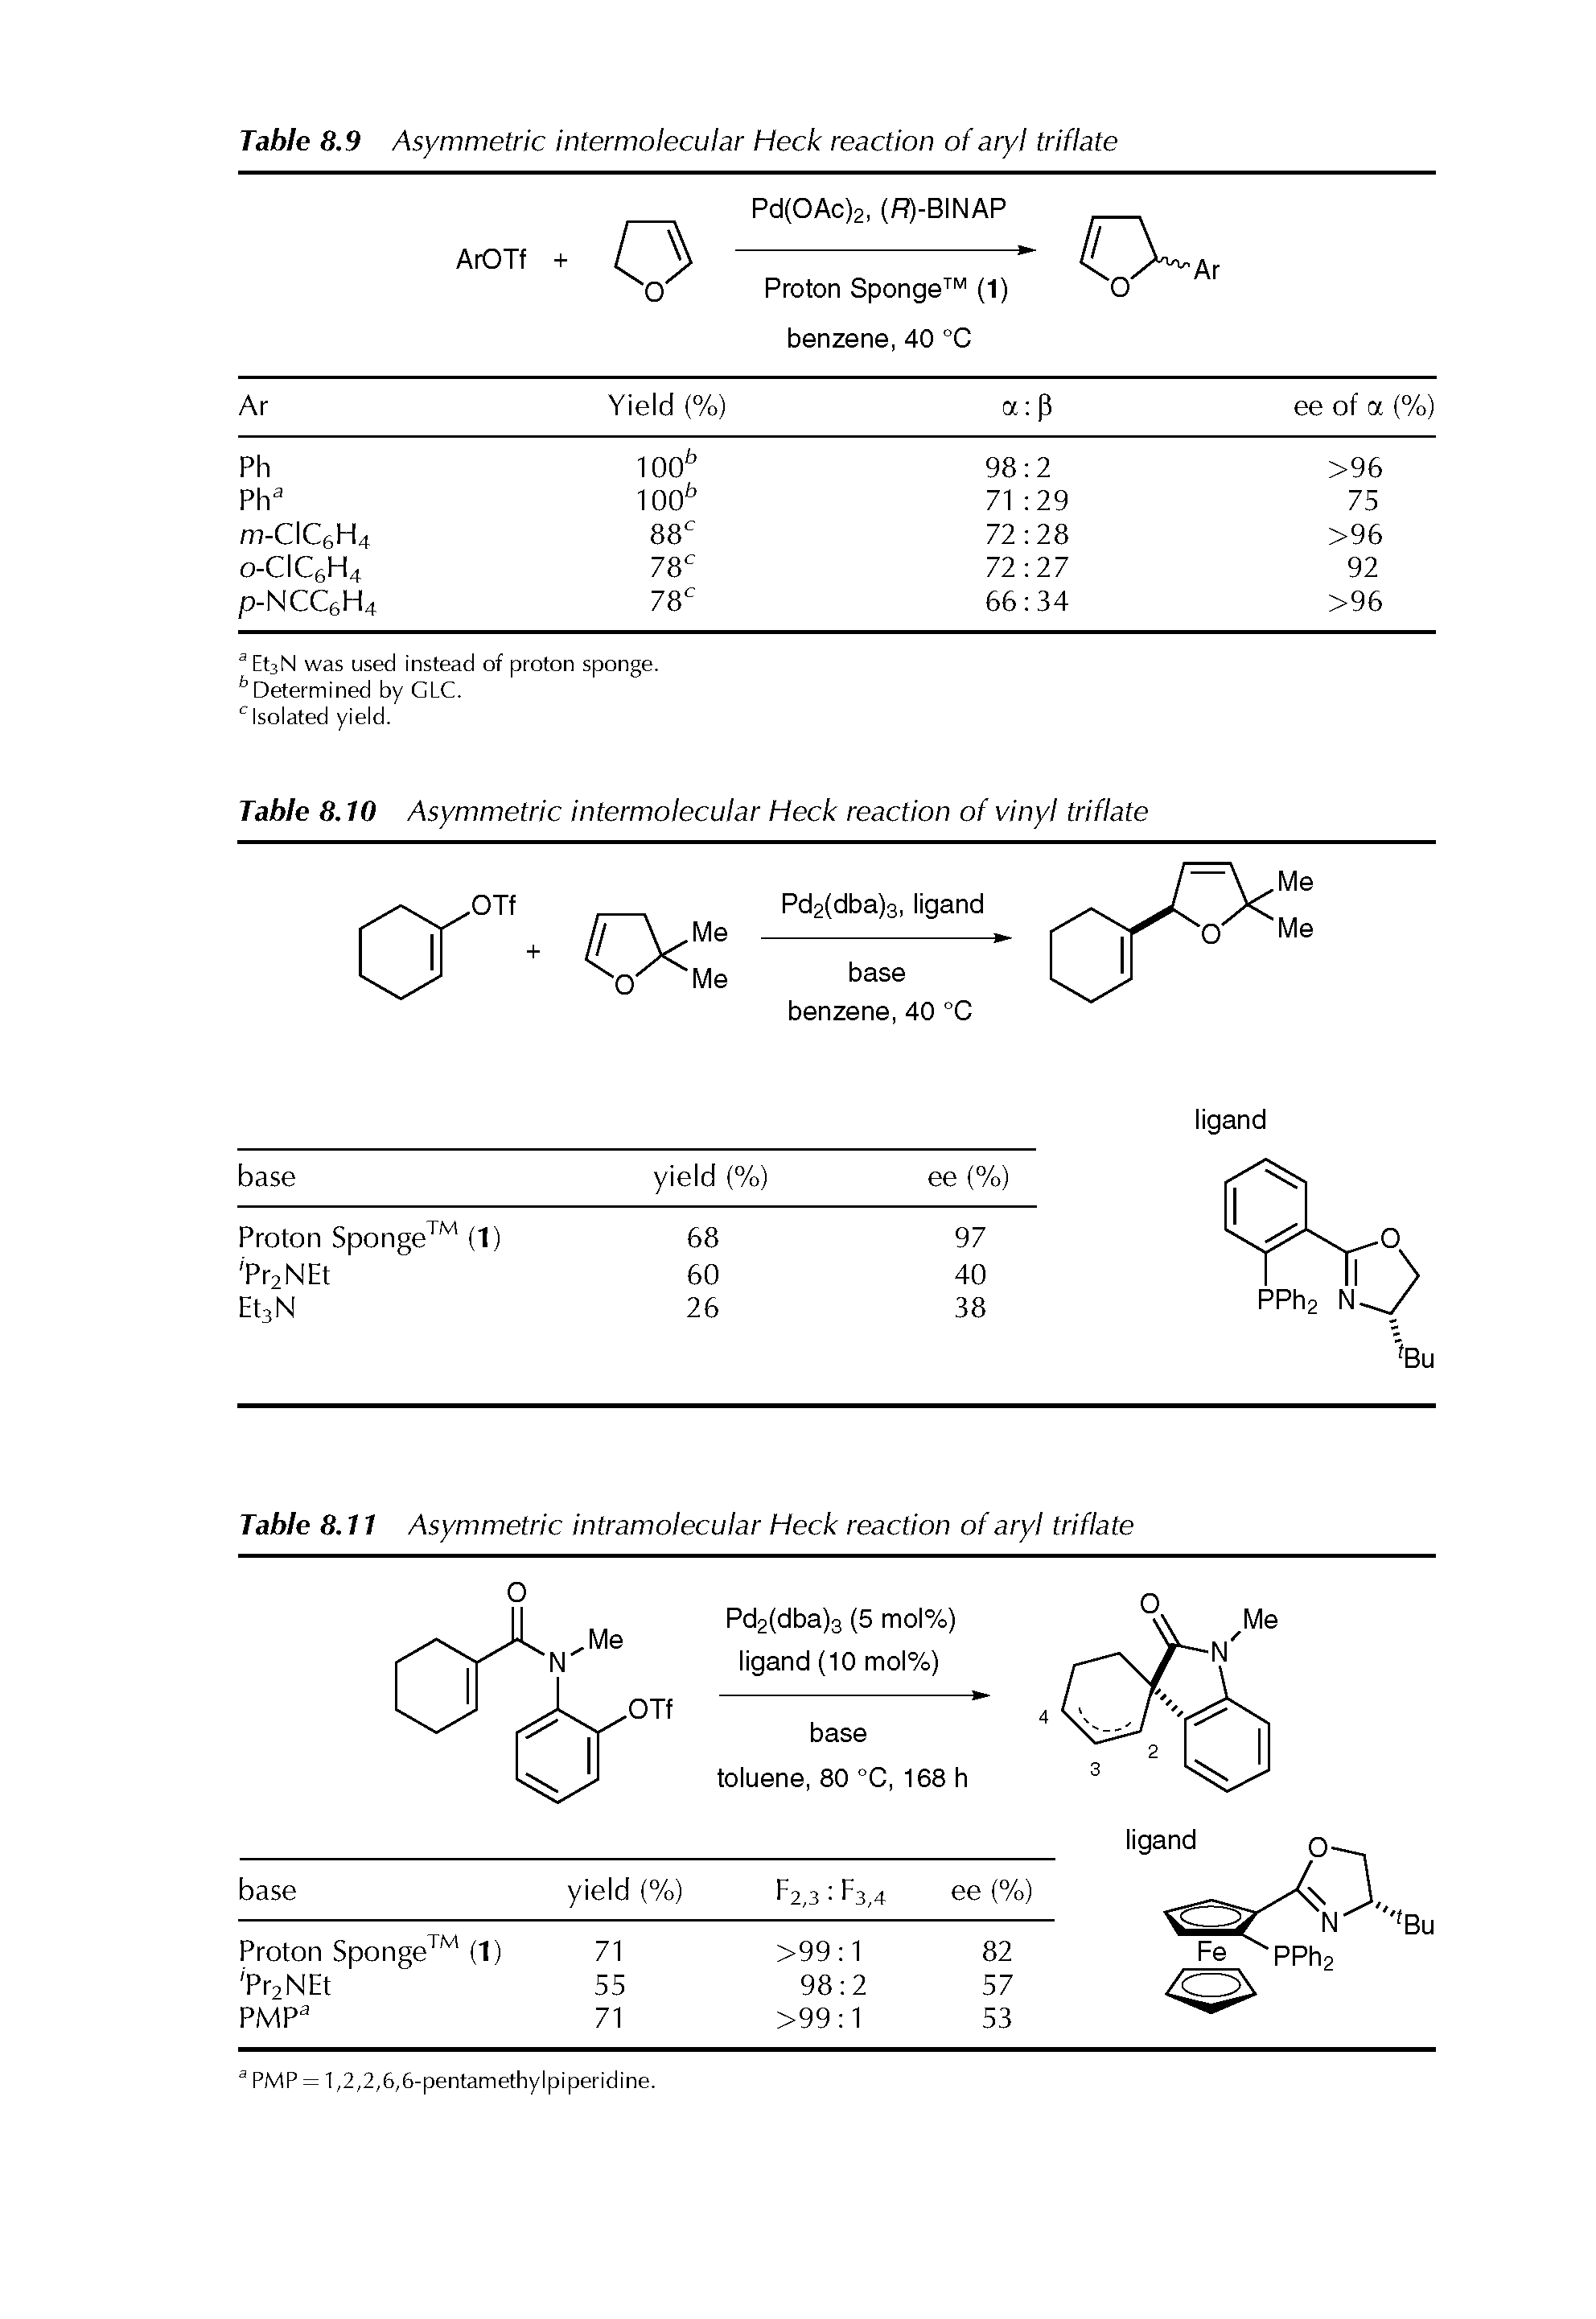 Table 8.11 Asymmetric intramolecular Heck reaction of aryl triflate...